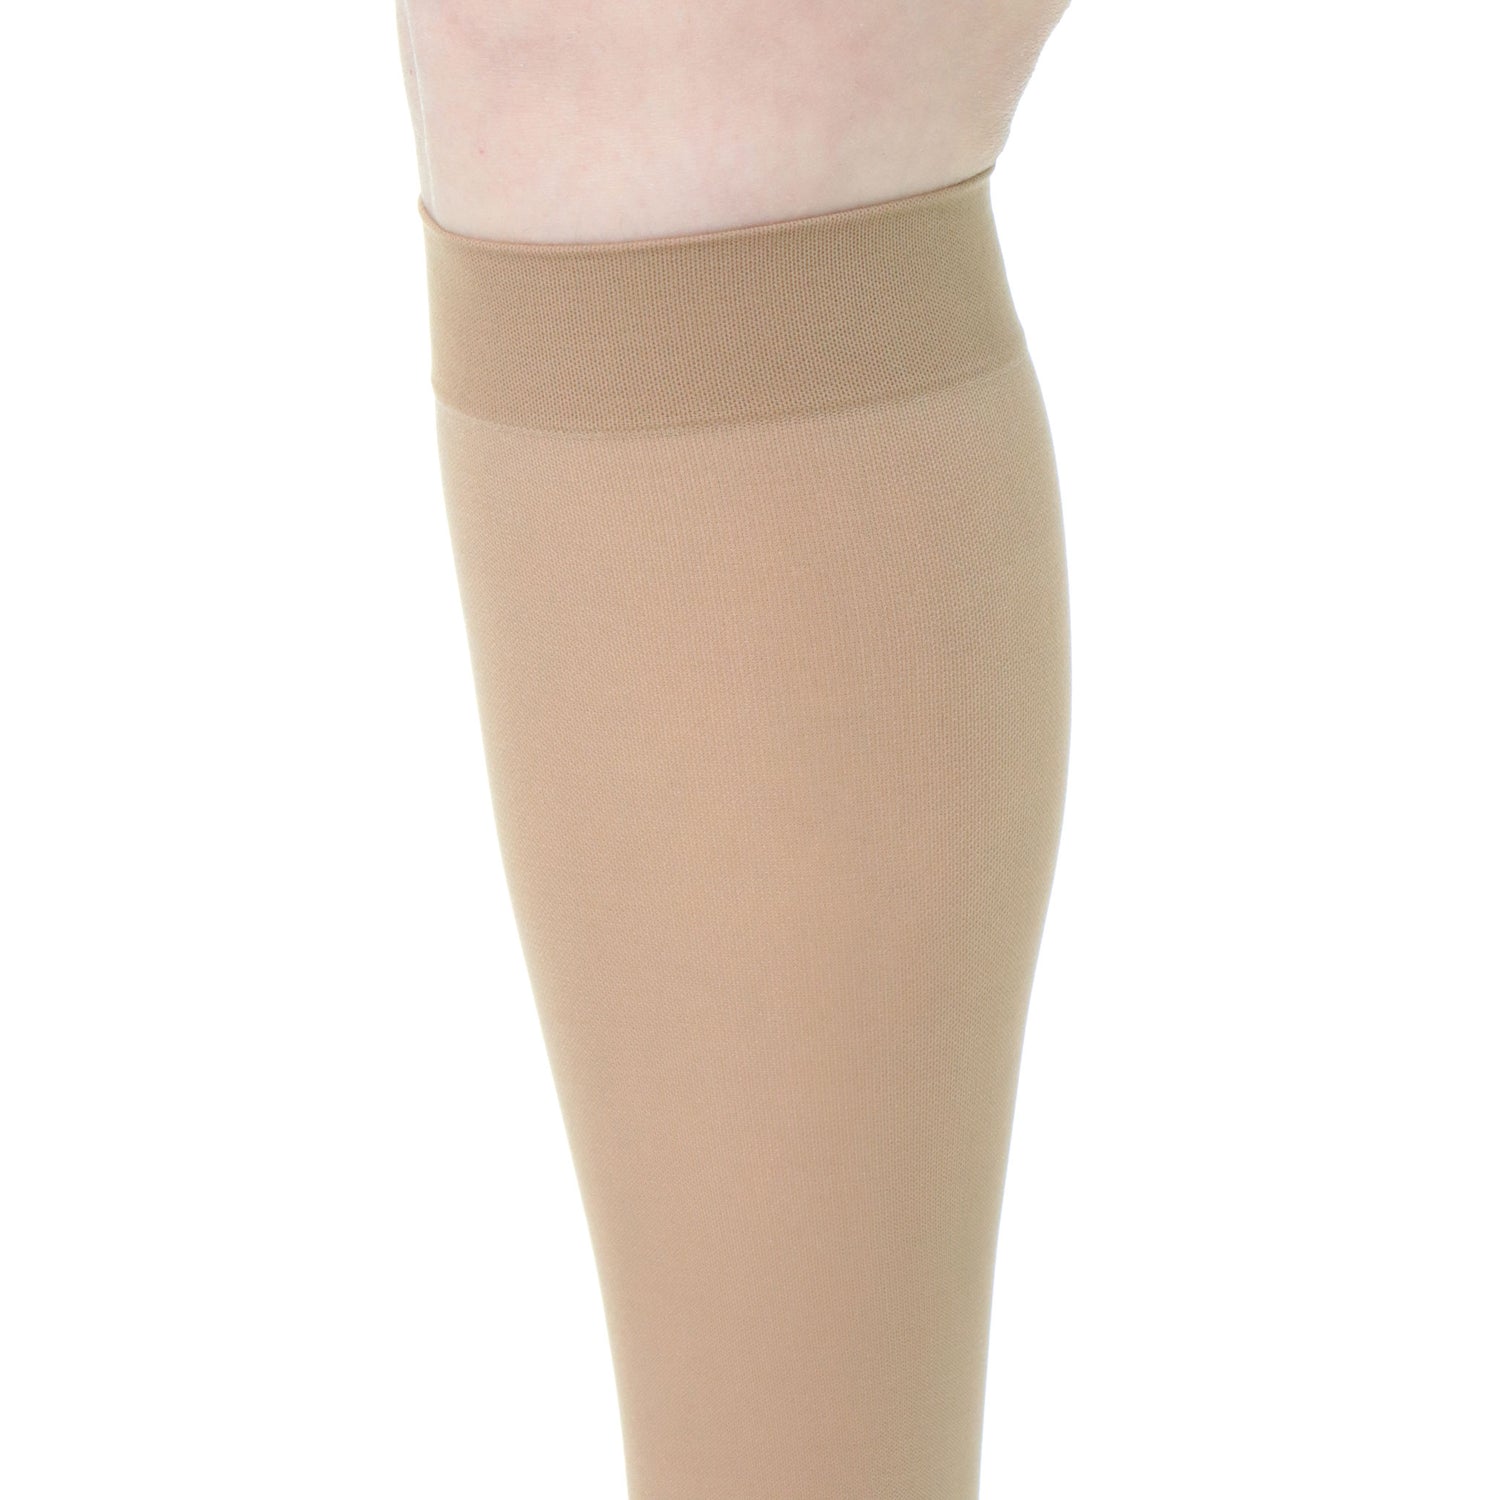  Compression Socks, 20-30 mmHg Graduated Knee-Hi